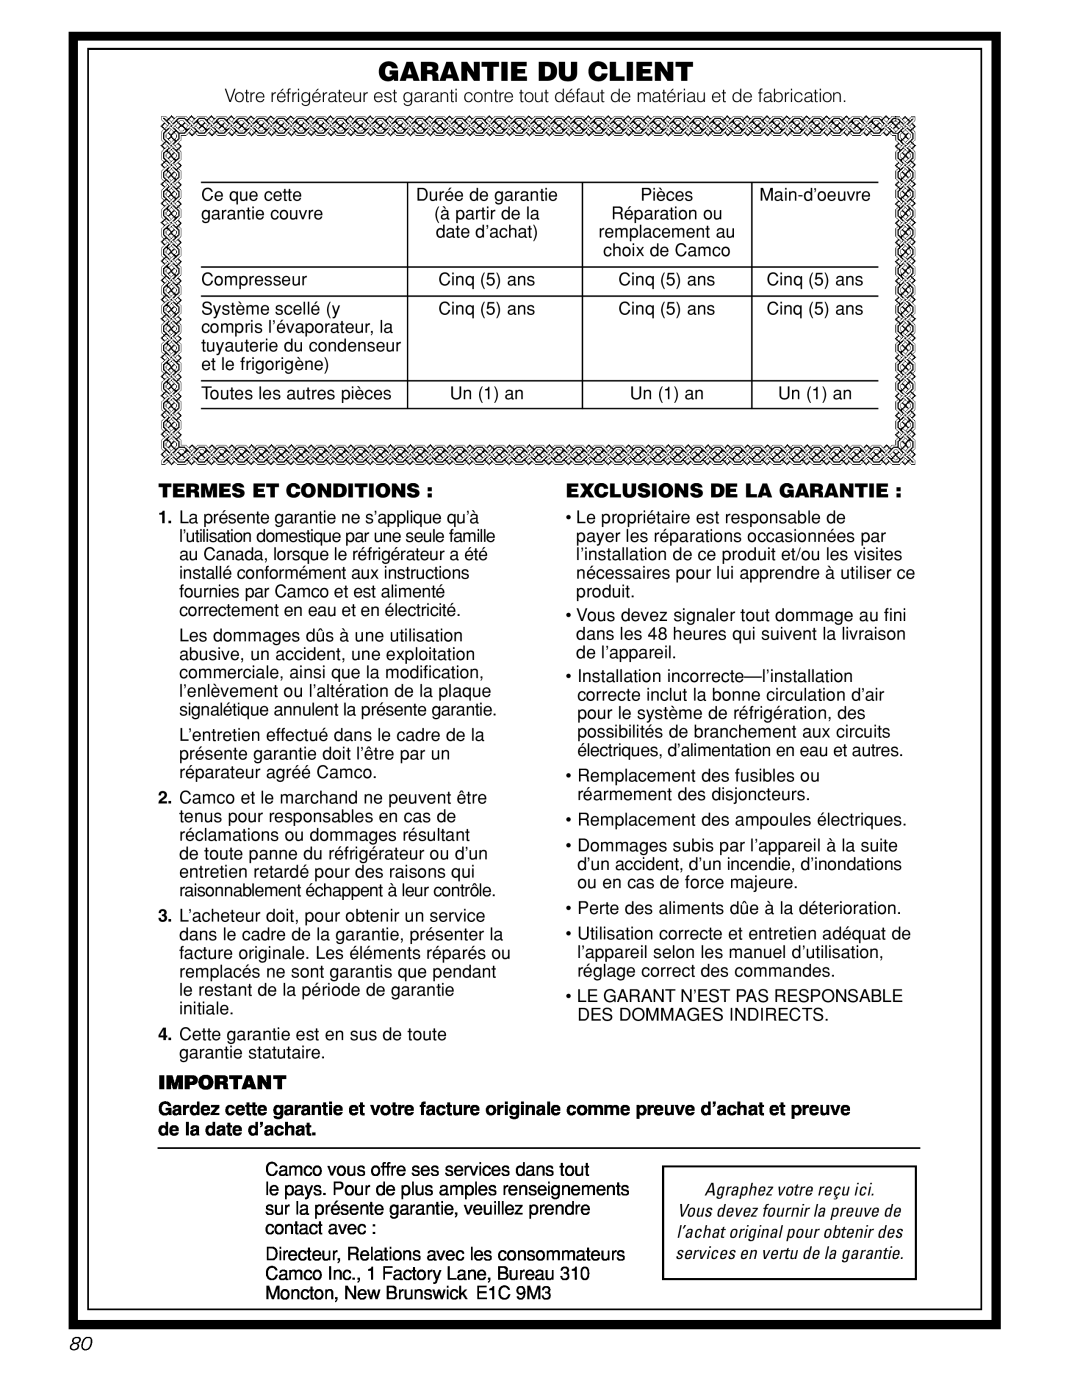 GE Monogram 22, 20 operating instructions Garantie Du Client, Termes Et Conditions, Exclusions De La Garantie 